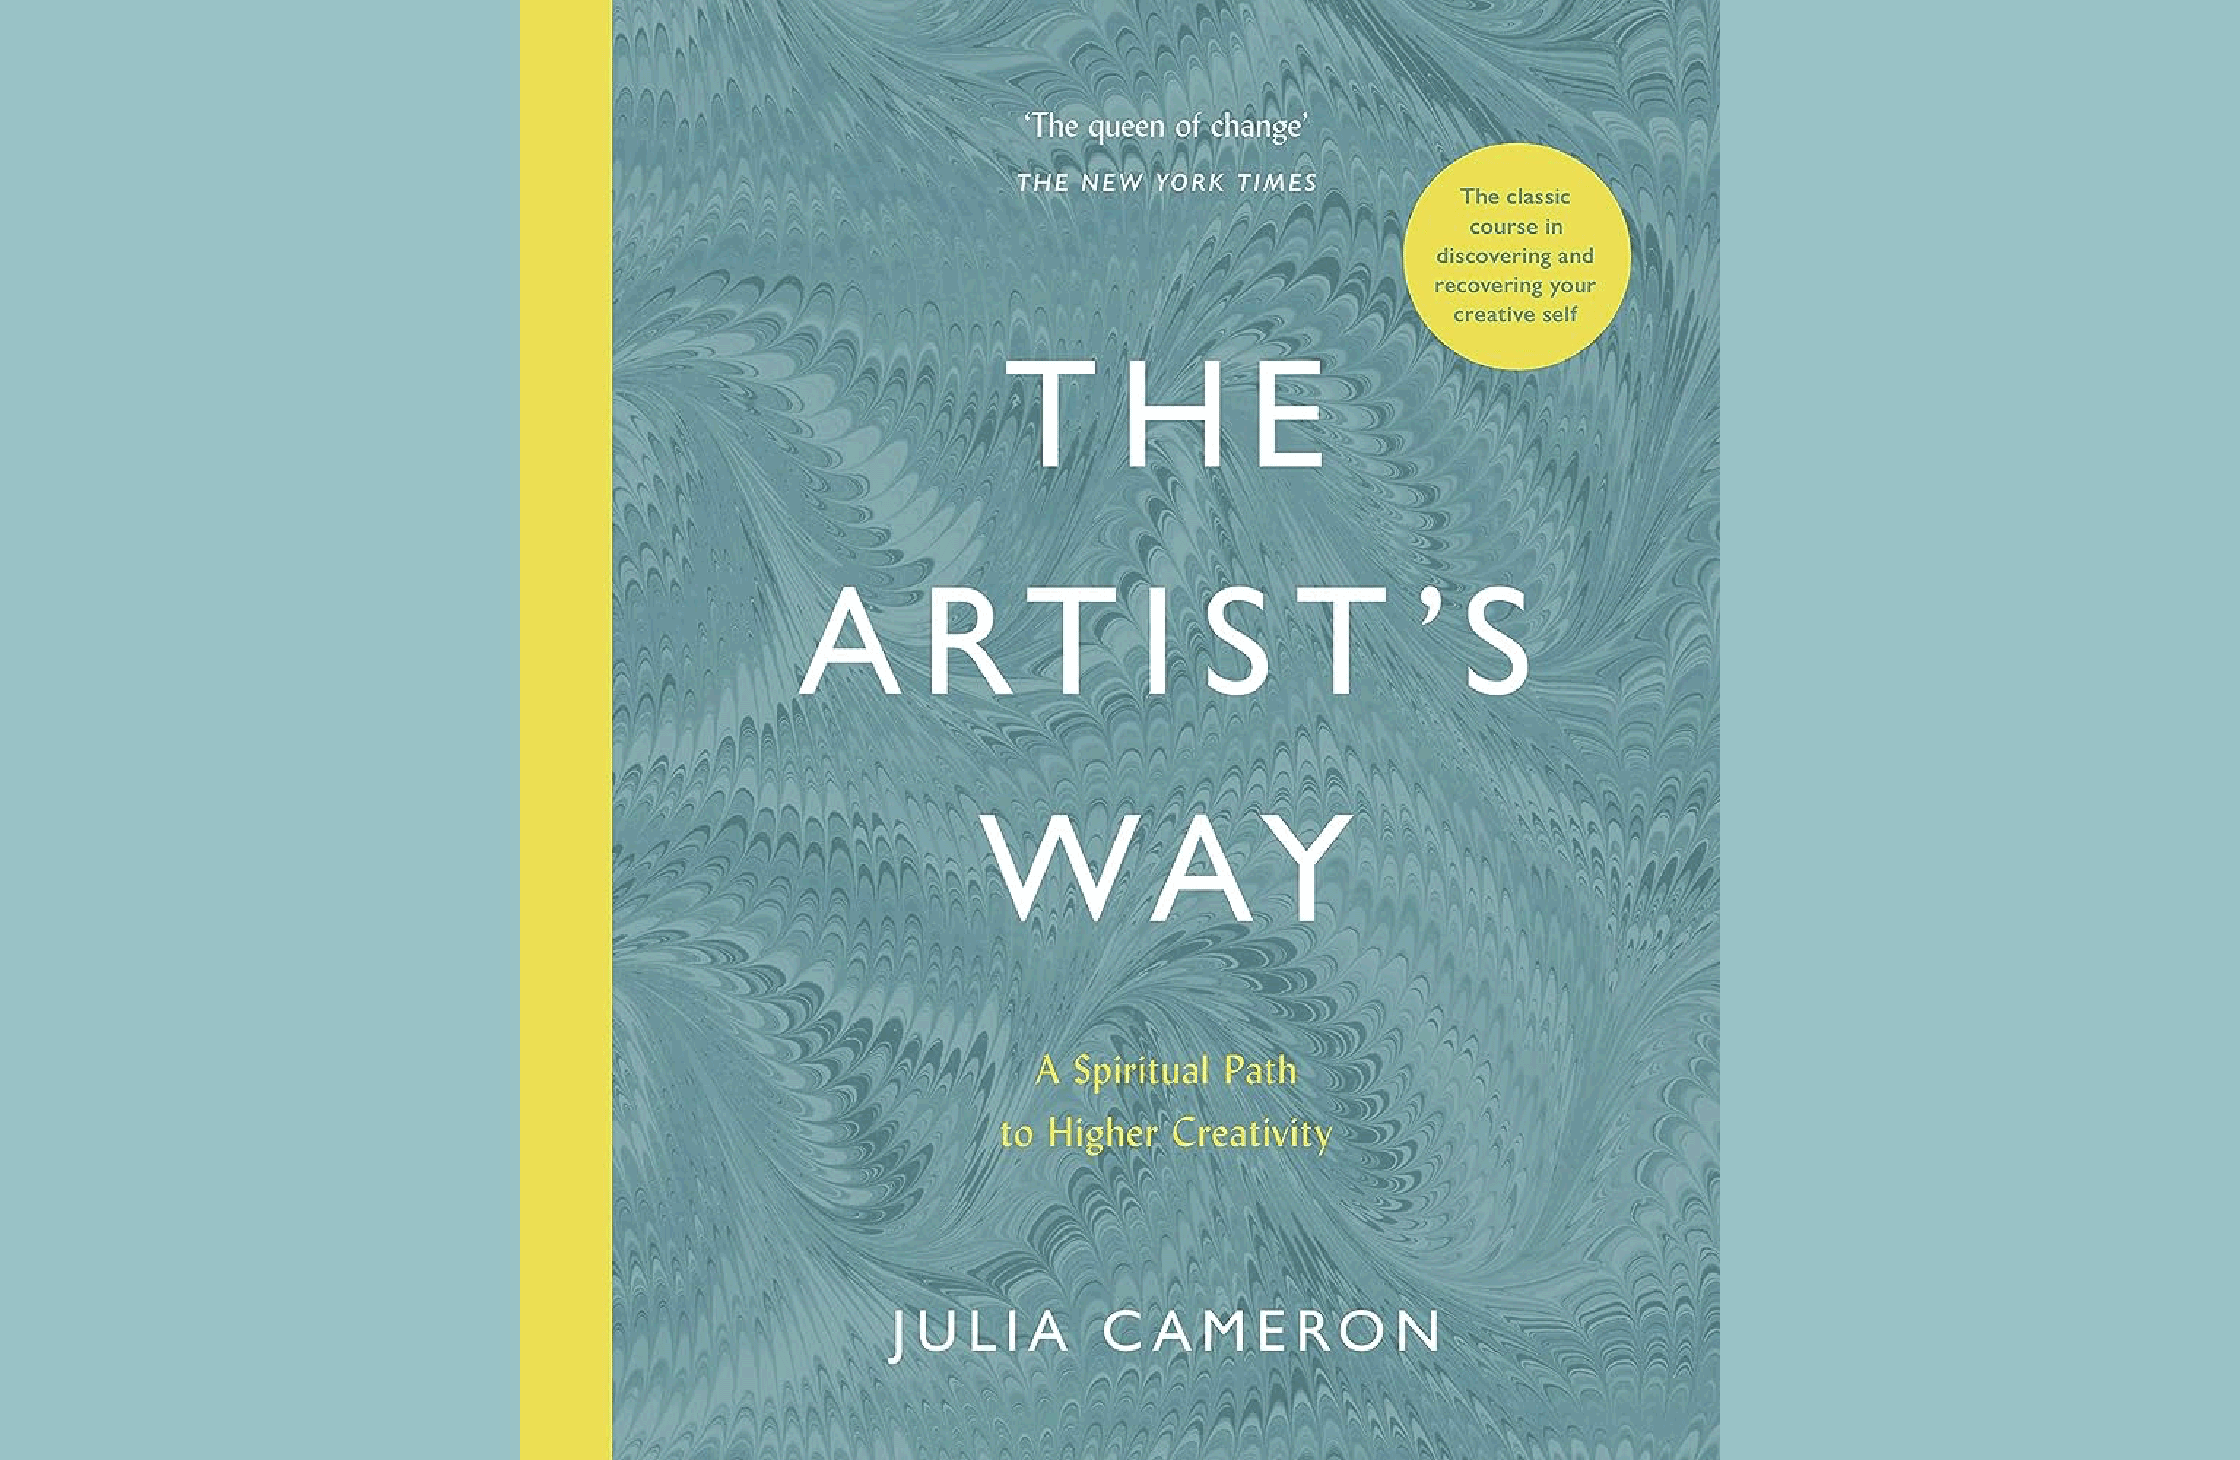 Summary: The Artist's Way by Julia Cameron